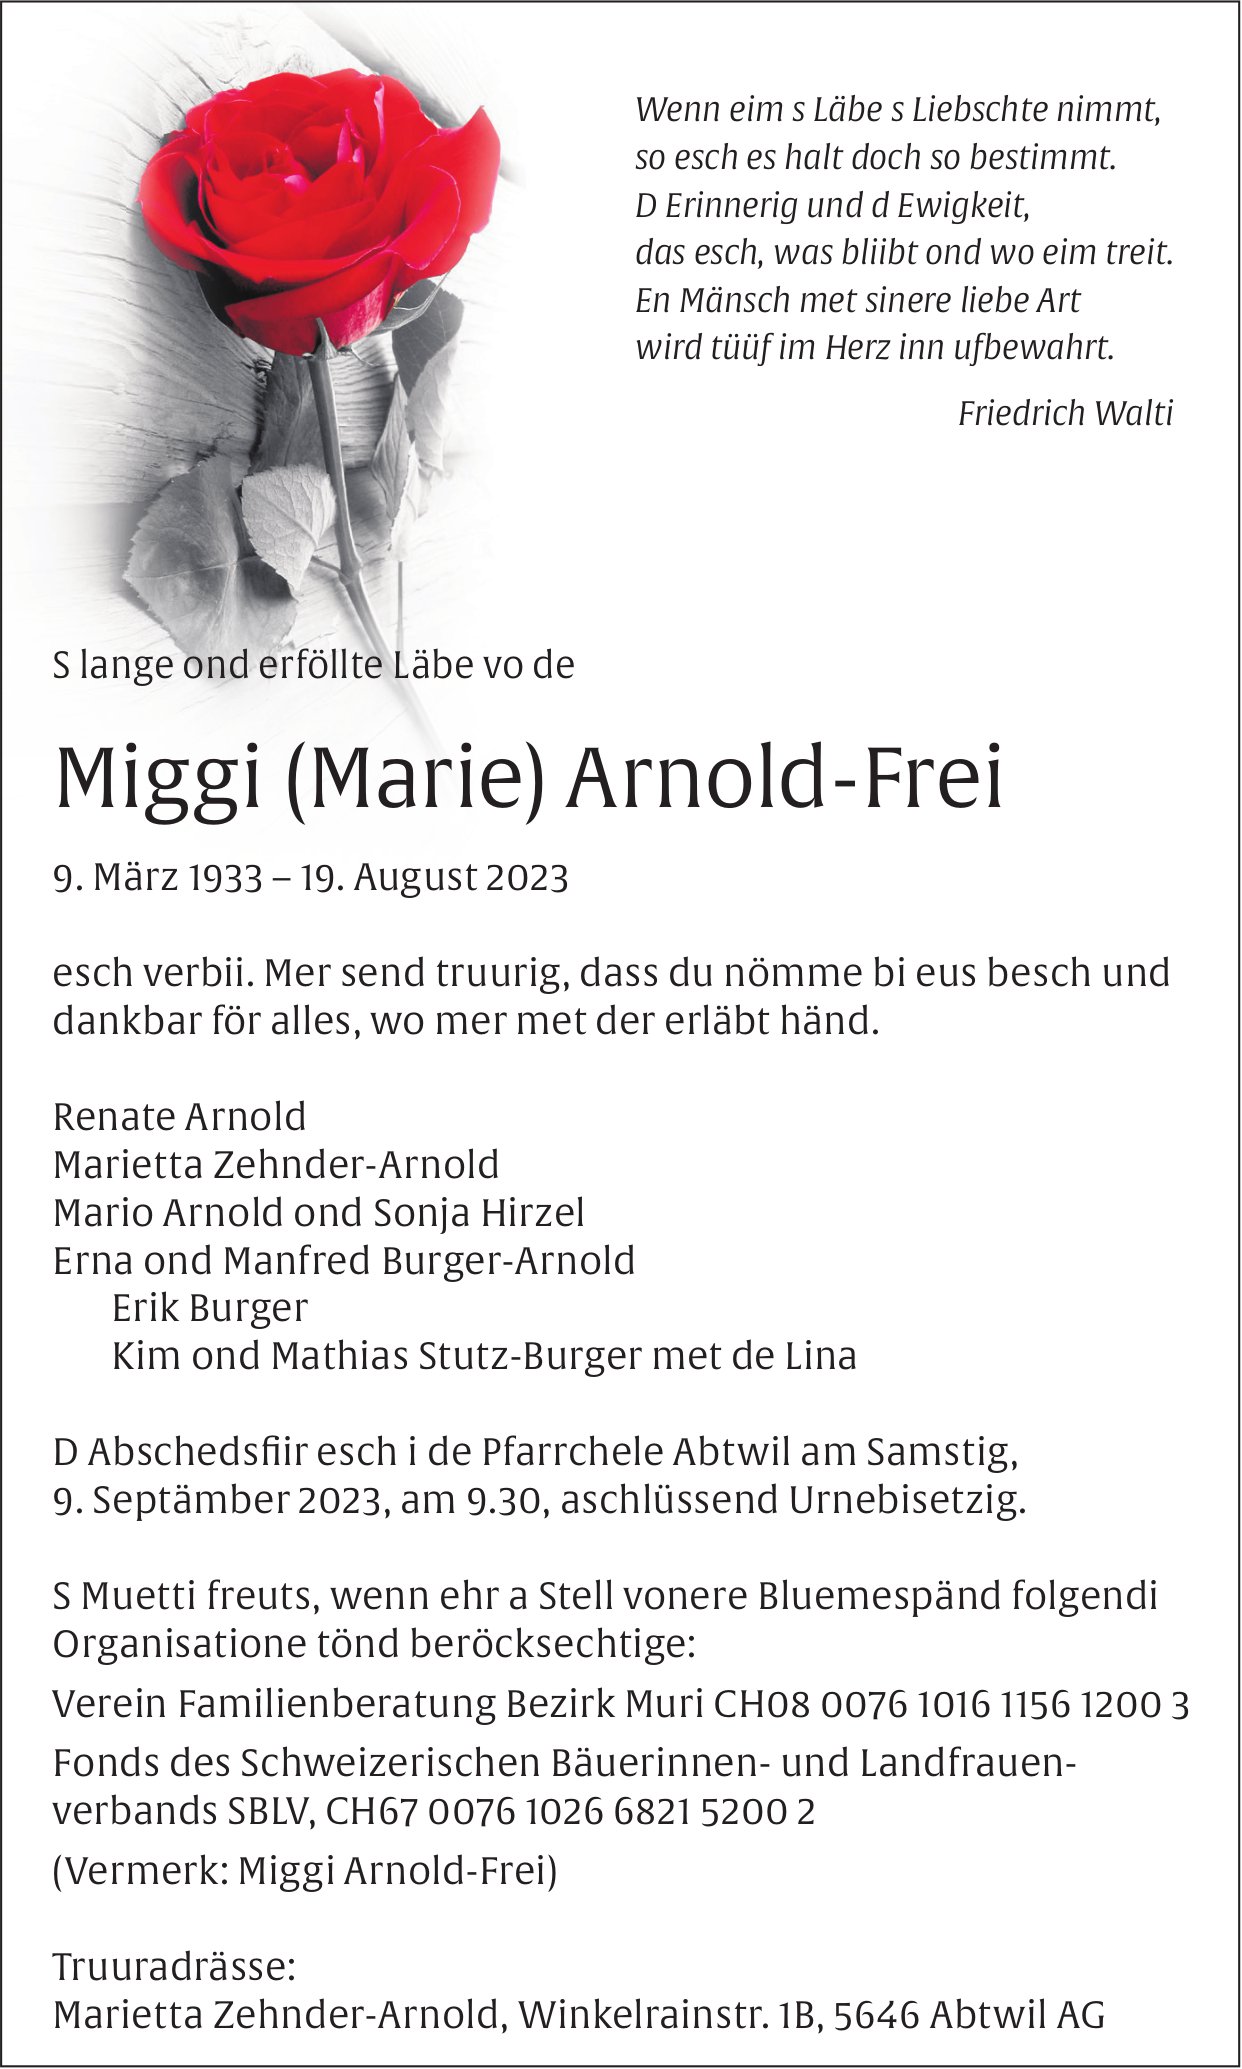 Arnold-Frei Miggi (Marie), August 2023 / TA